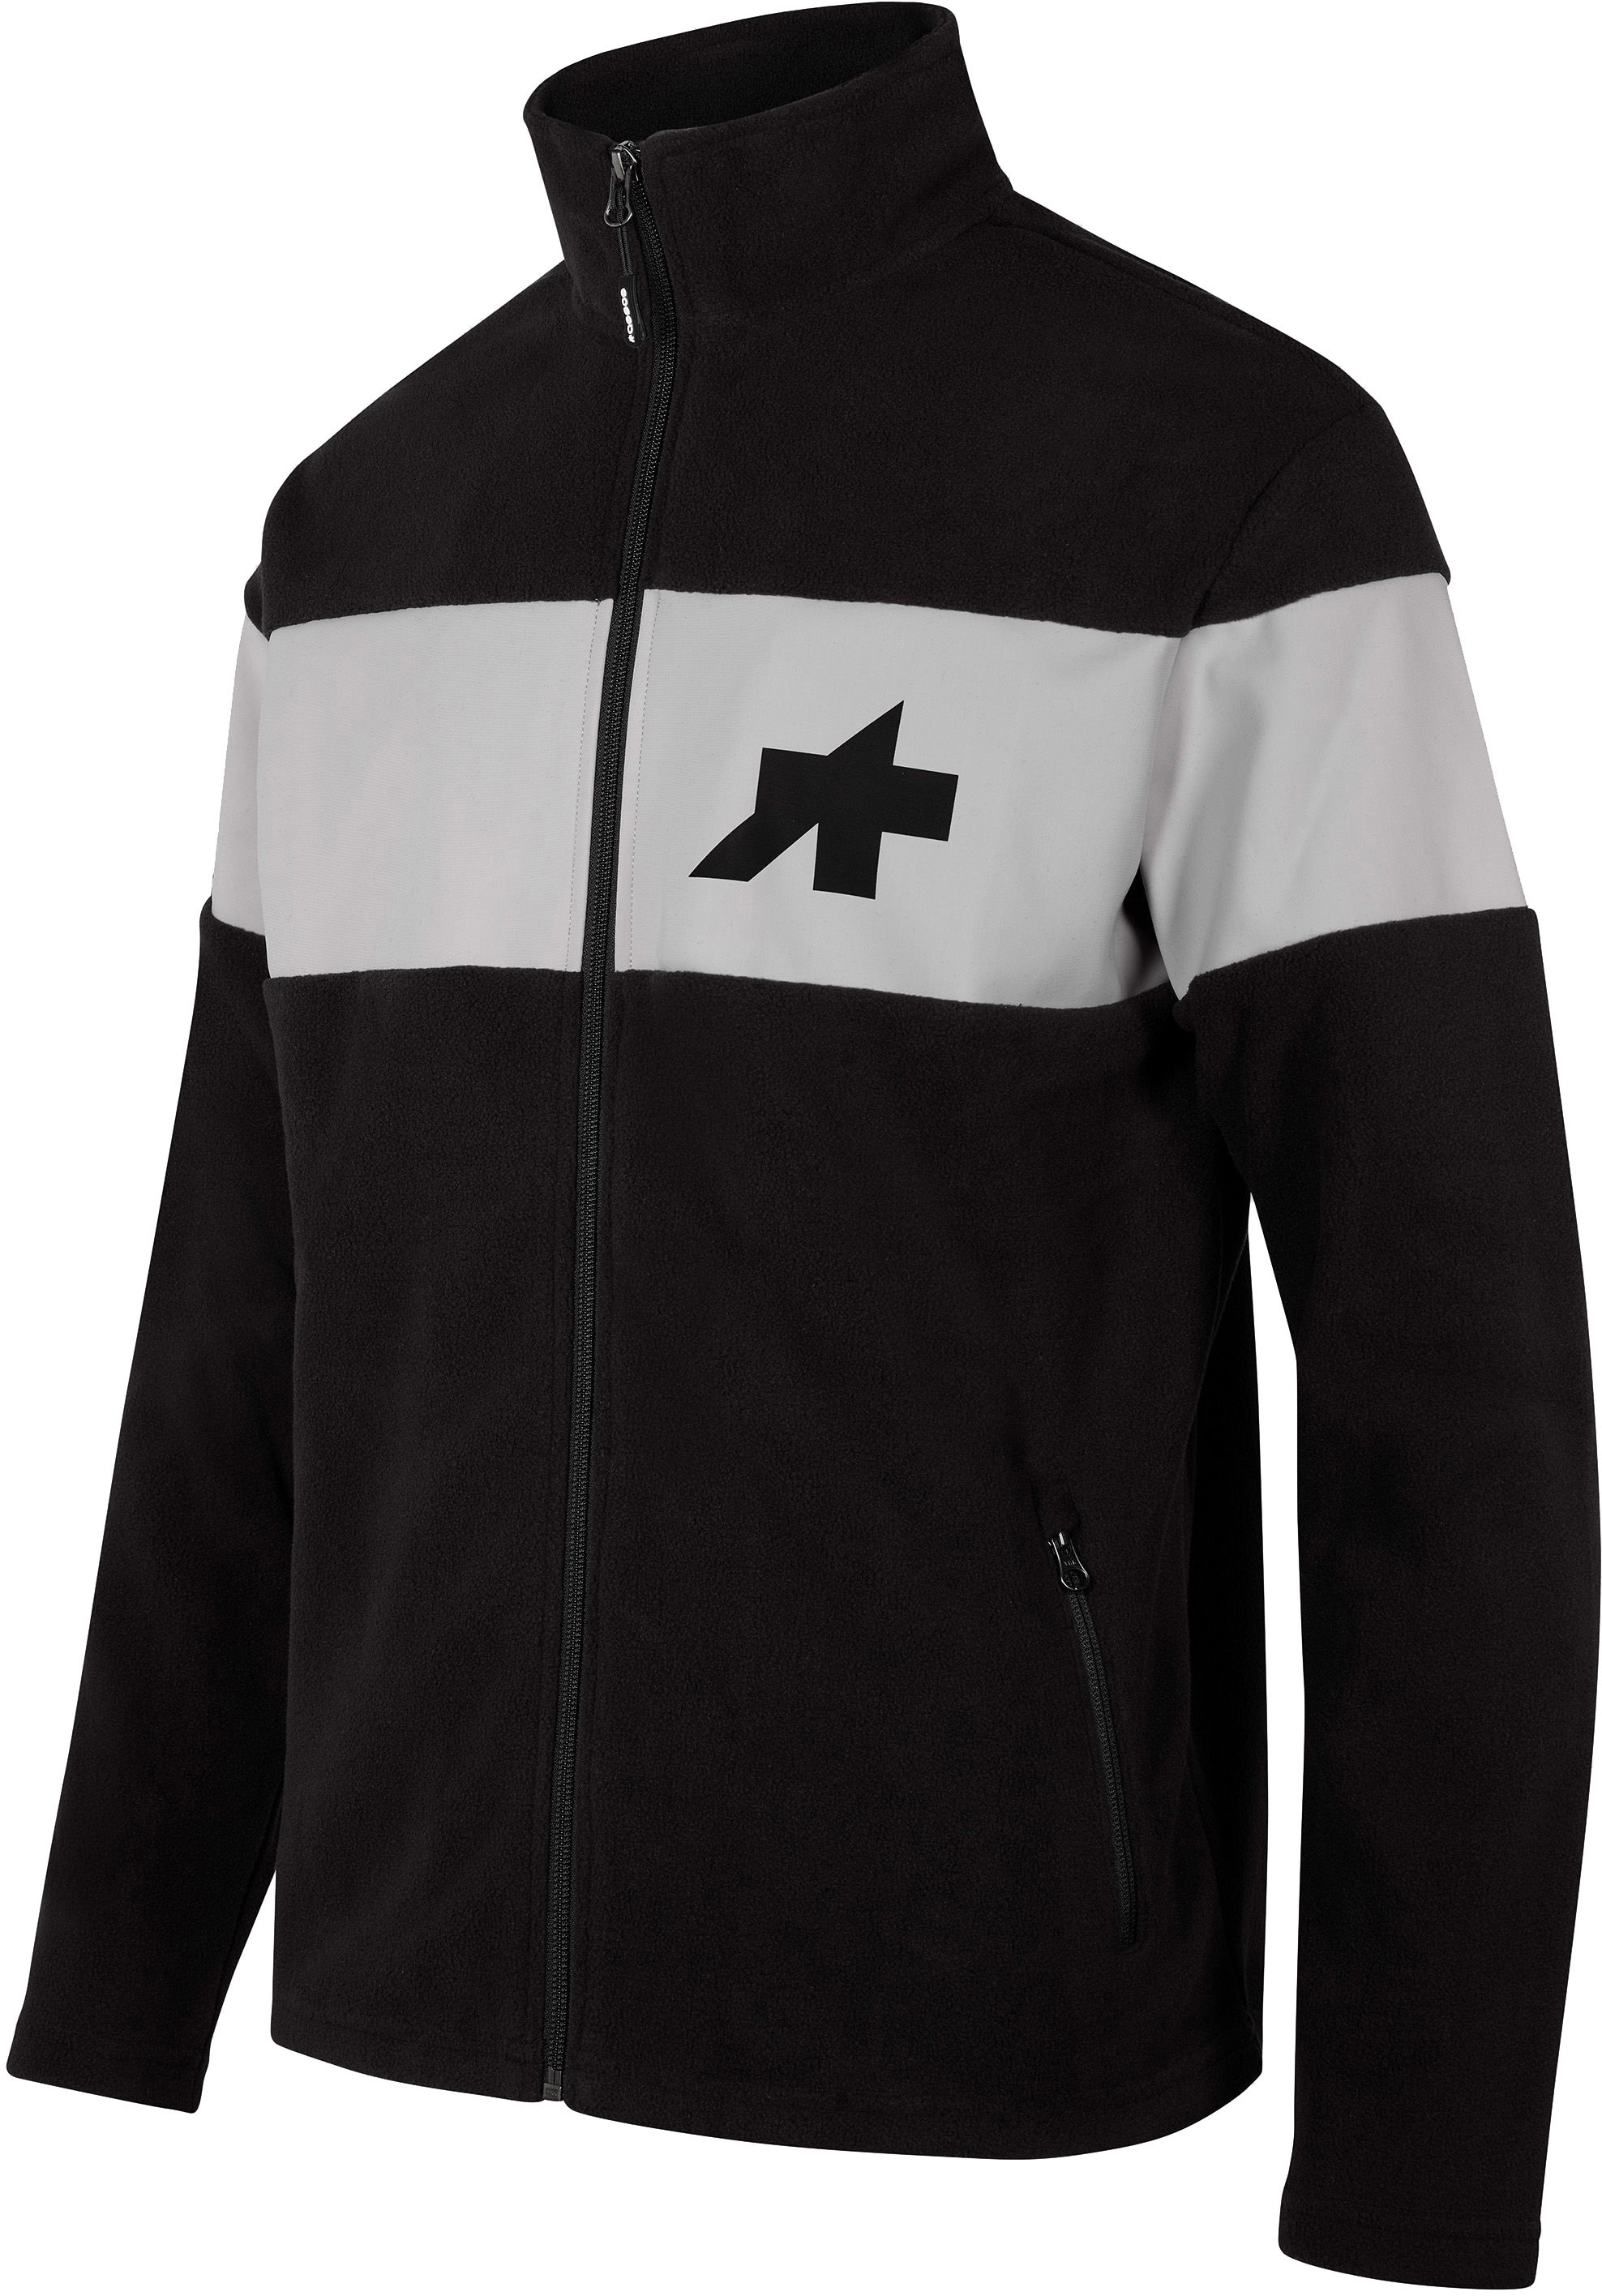 Beklædning - Merchandise - Assos SIGNATURE Sweater - Sort